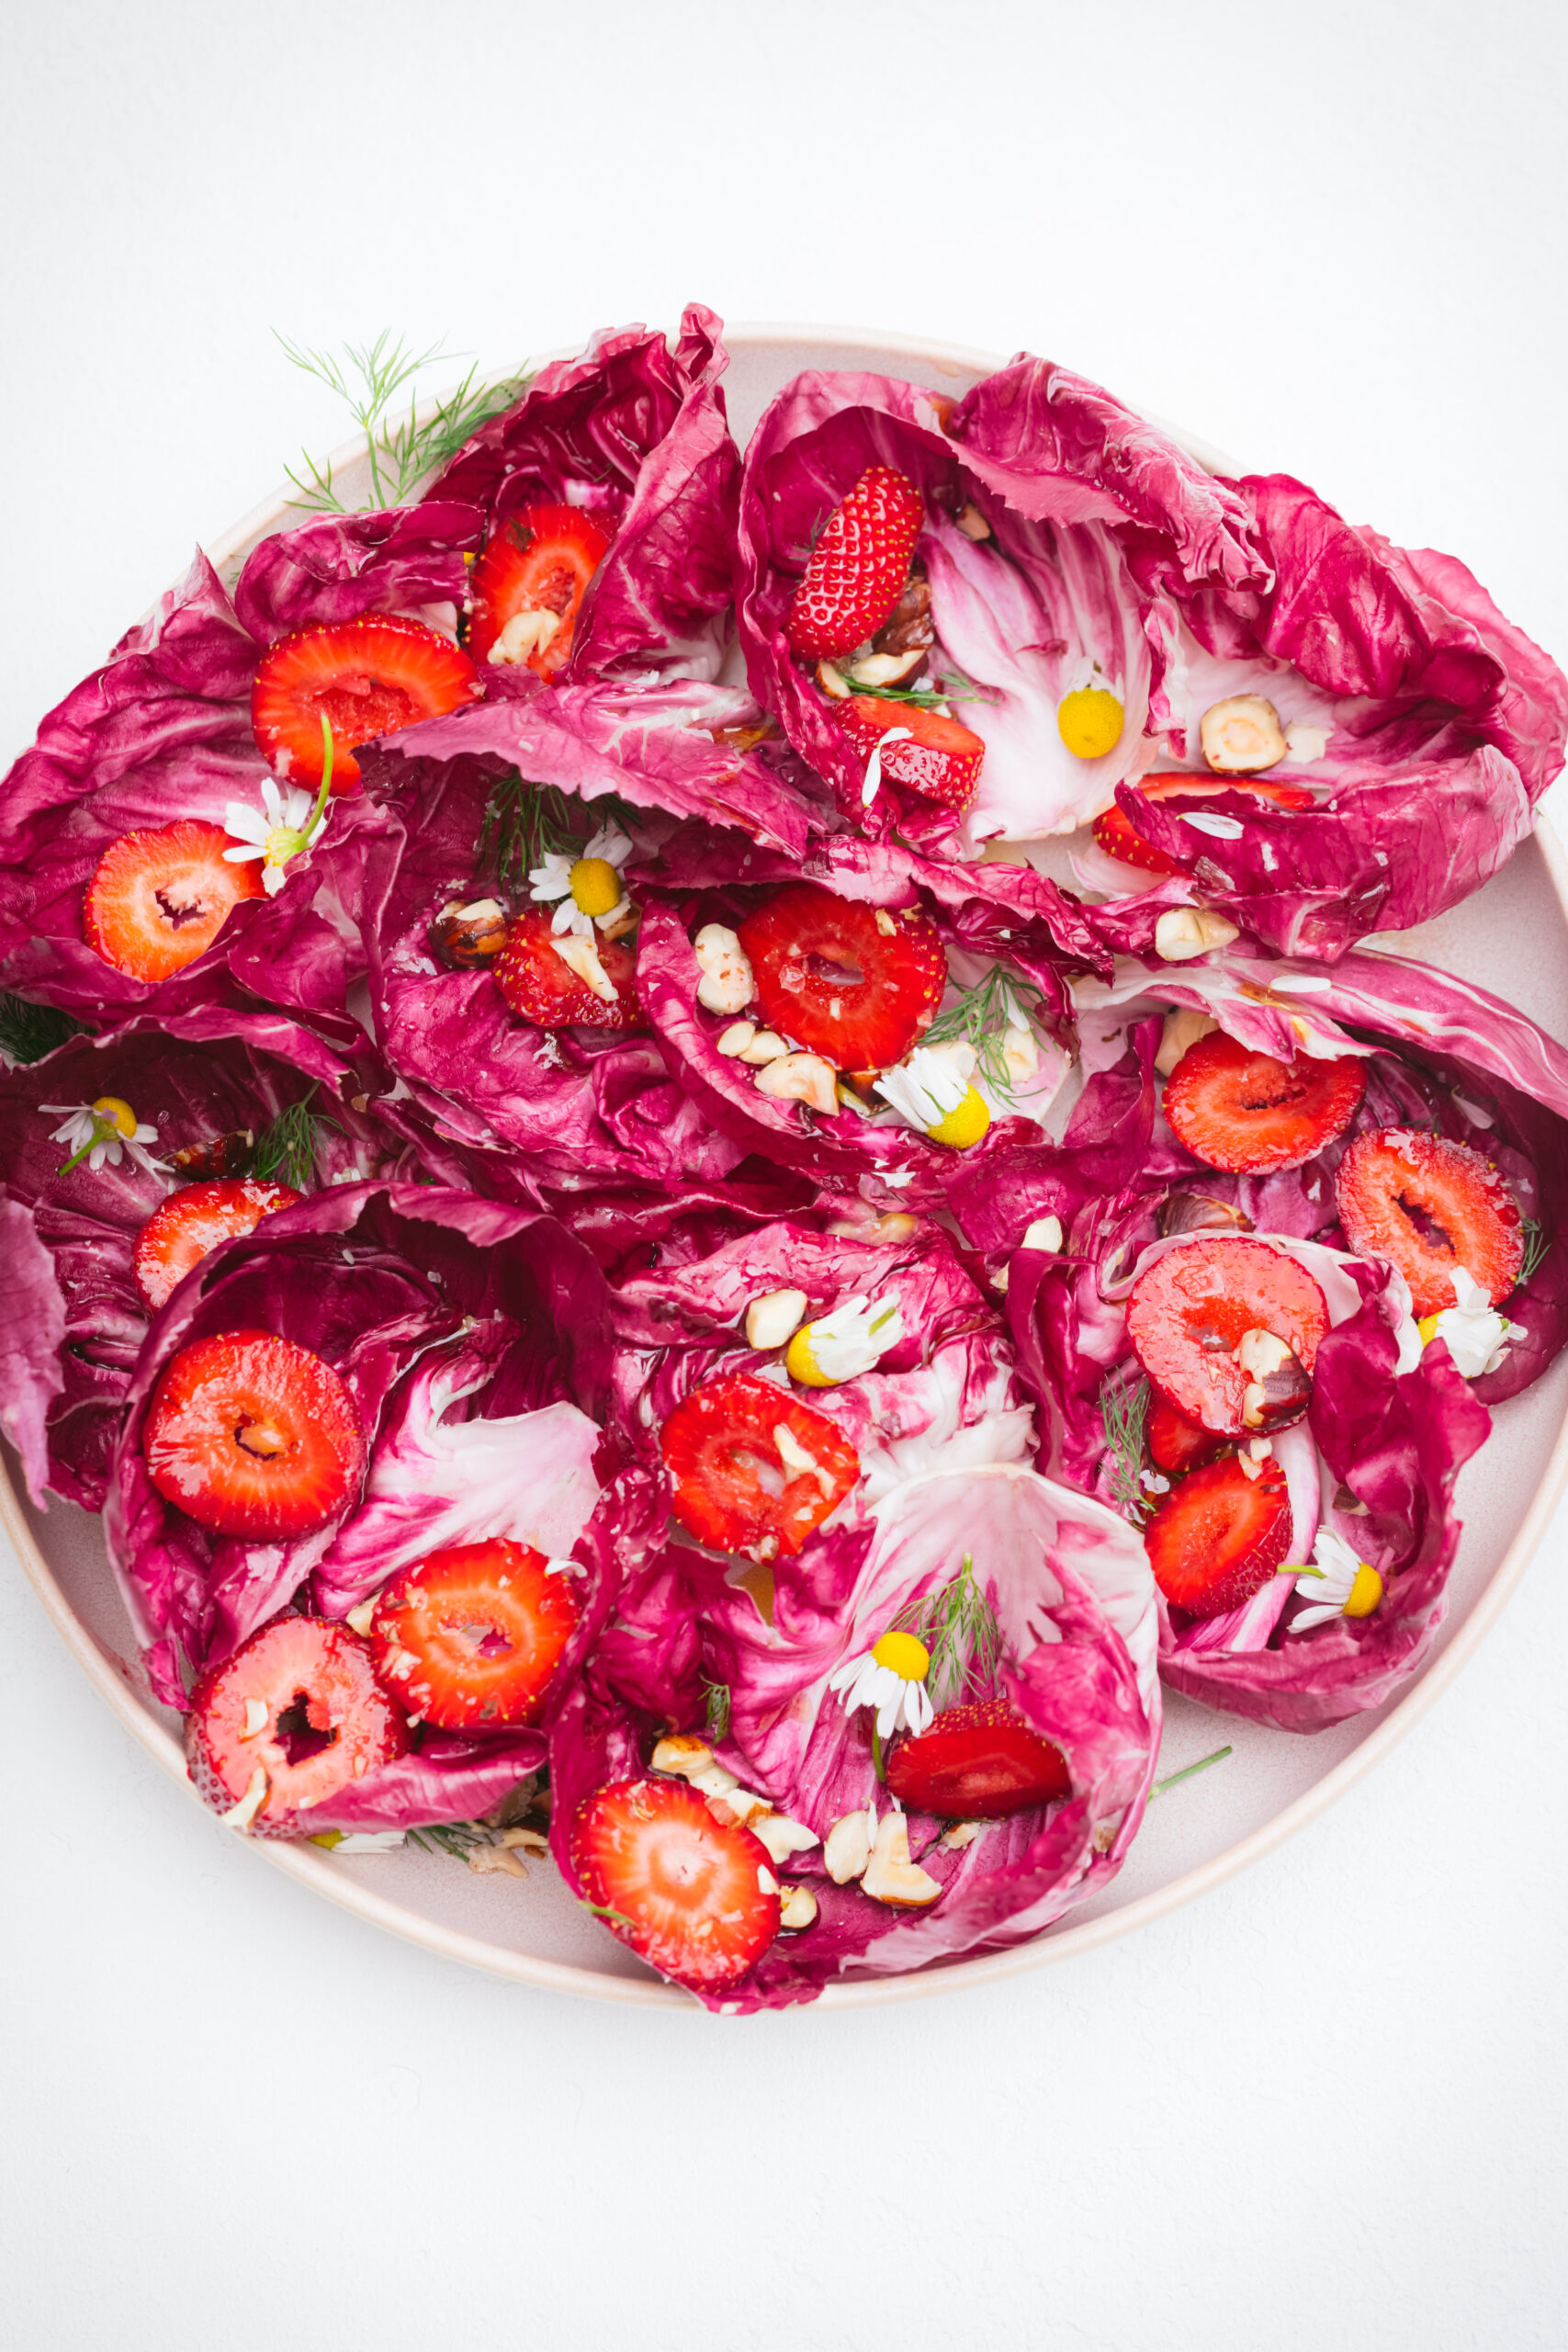 Strawberry Radicchio Salad with Hazelnuts